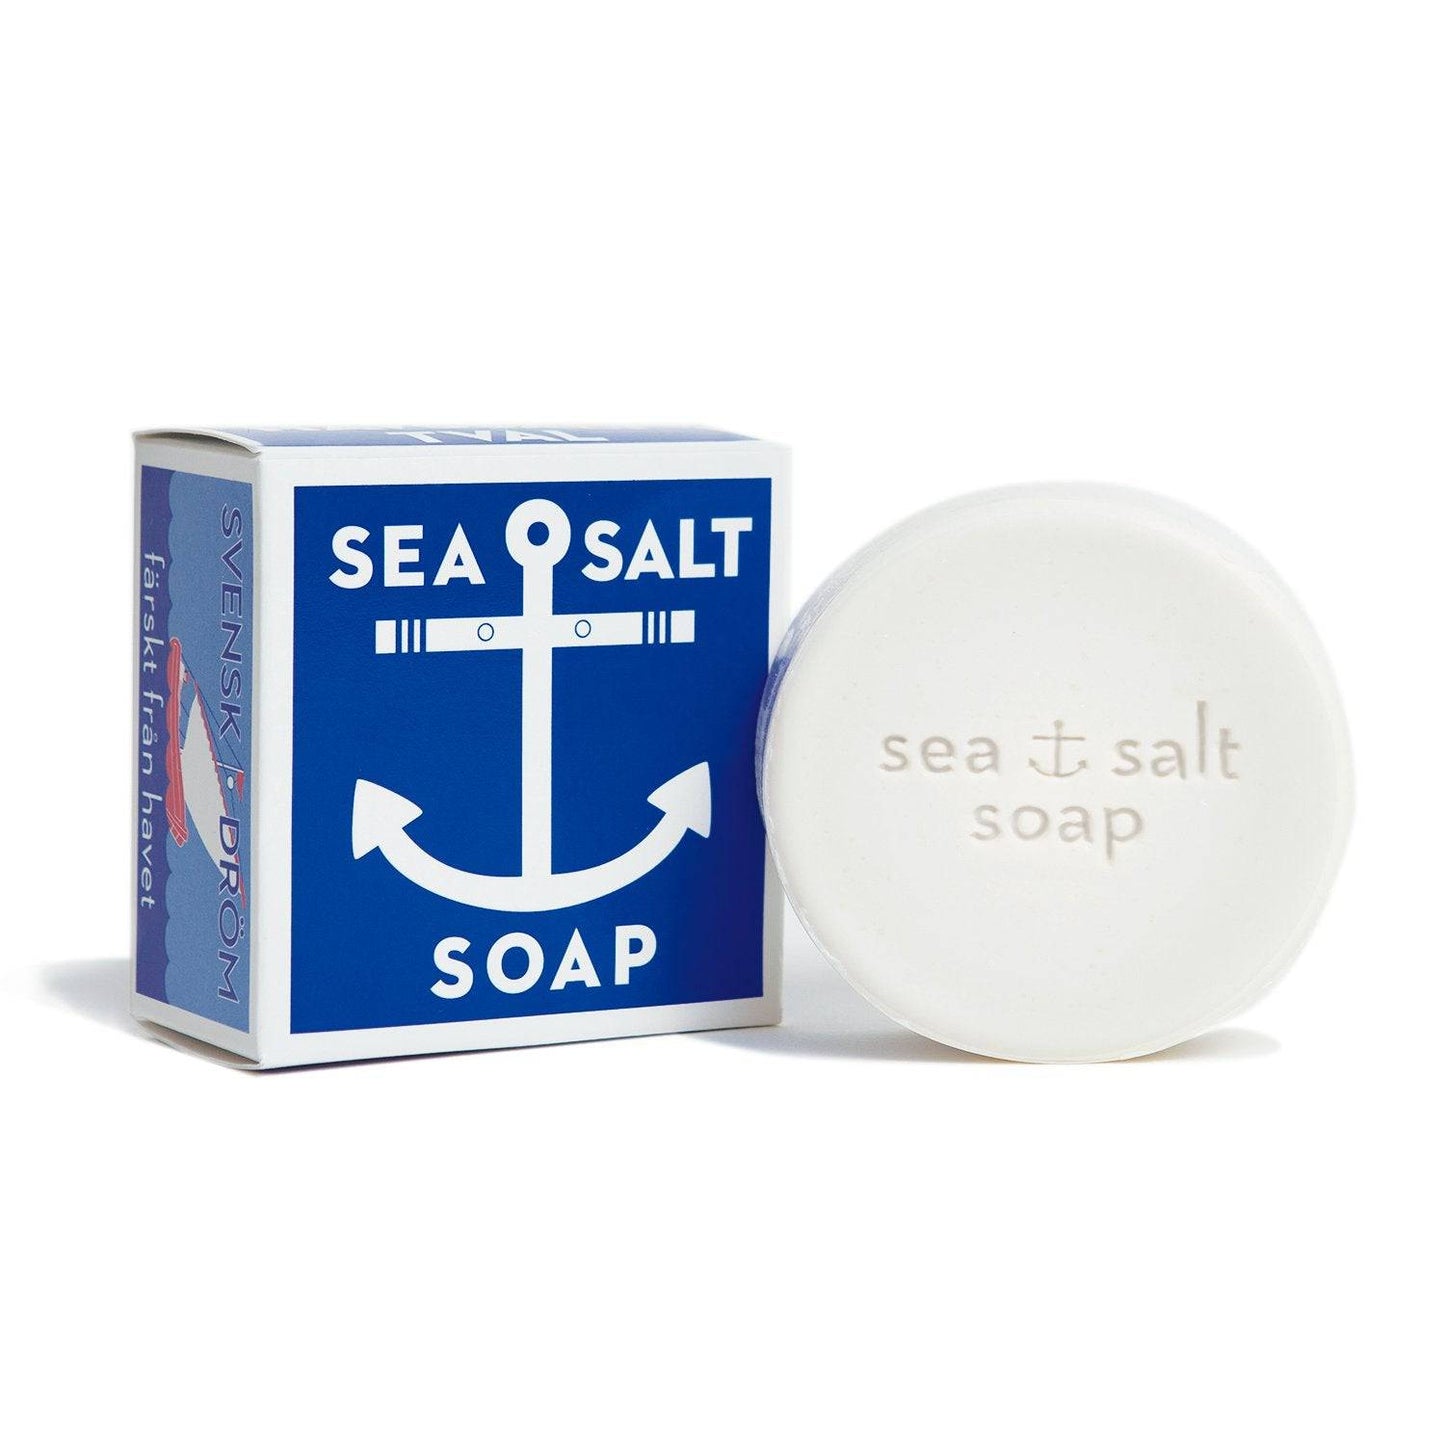 Kalastyle - Swedish Dream® Sea Salt Soap - Findlay Rowe Designs